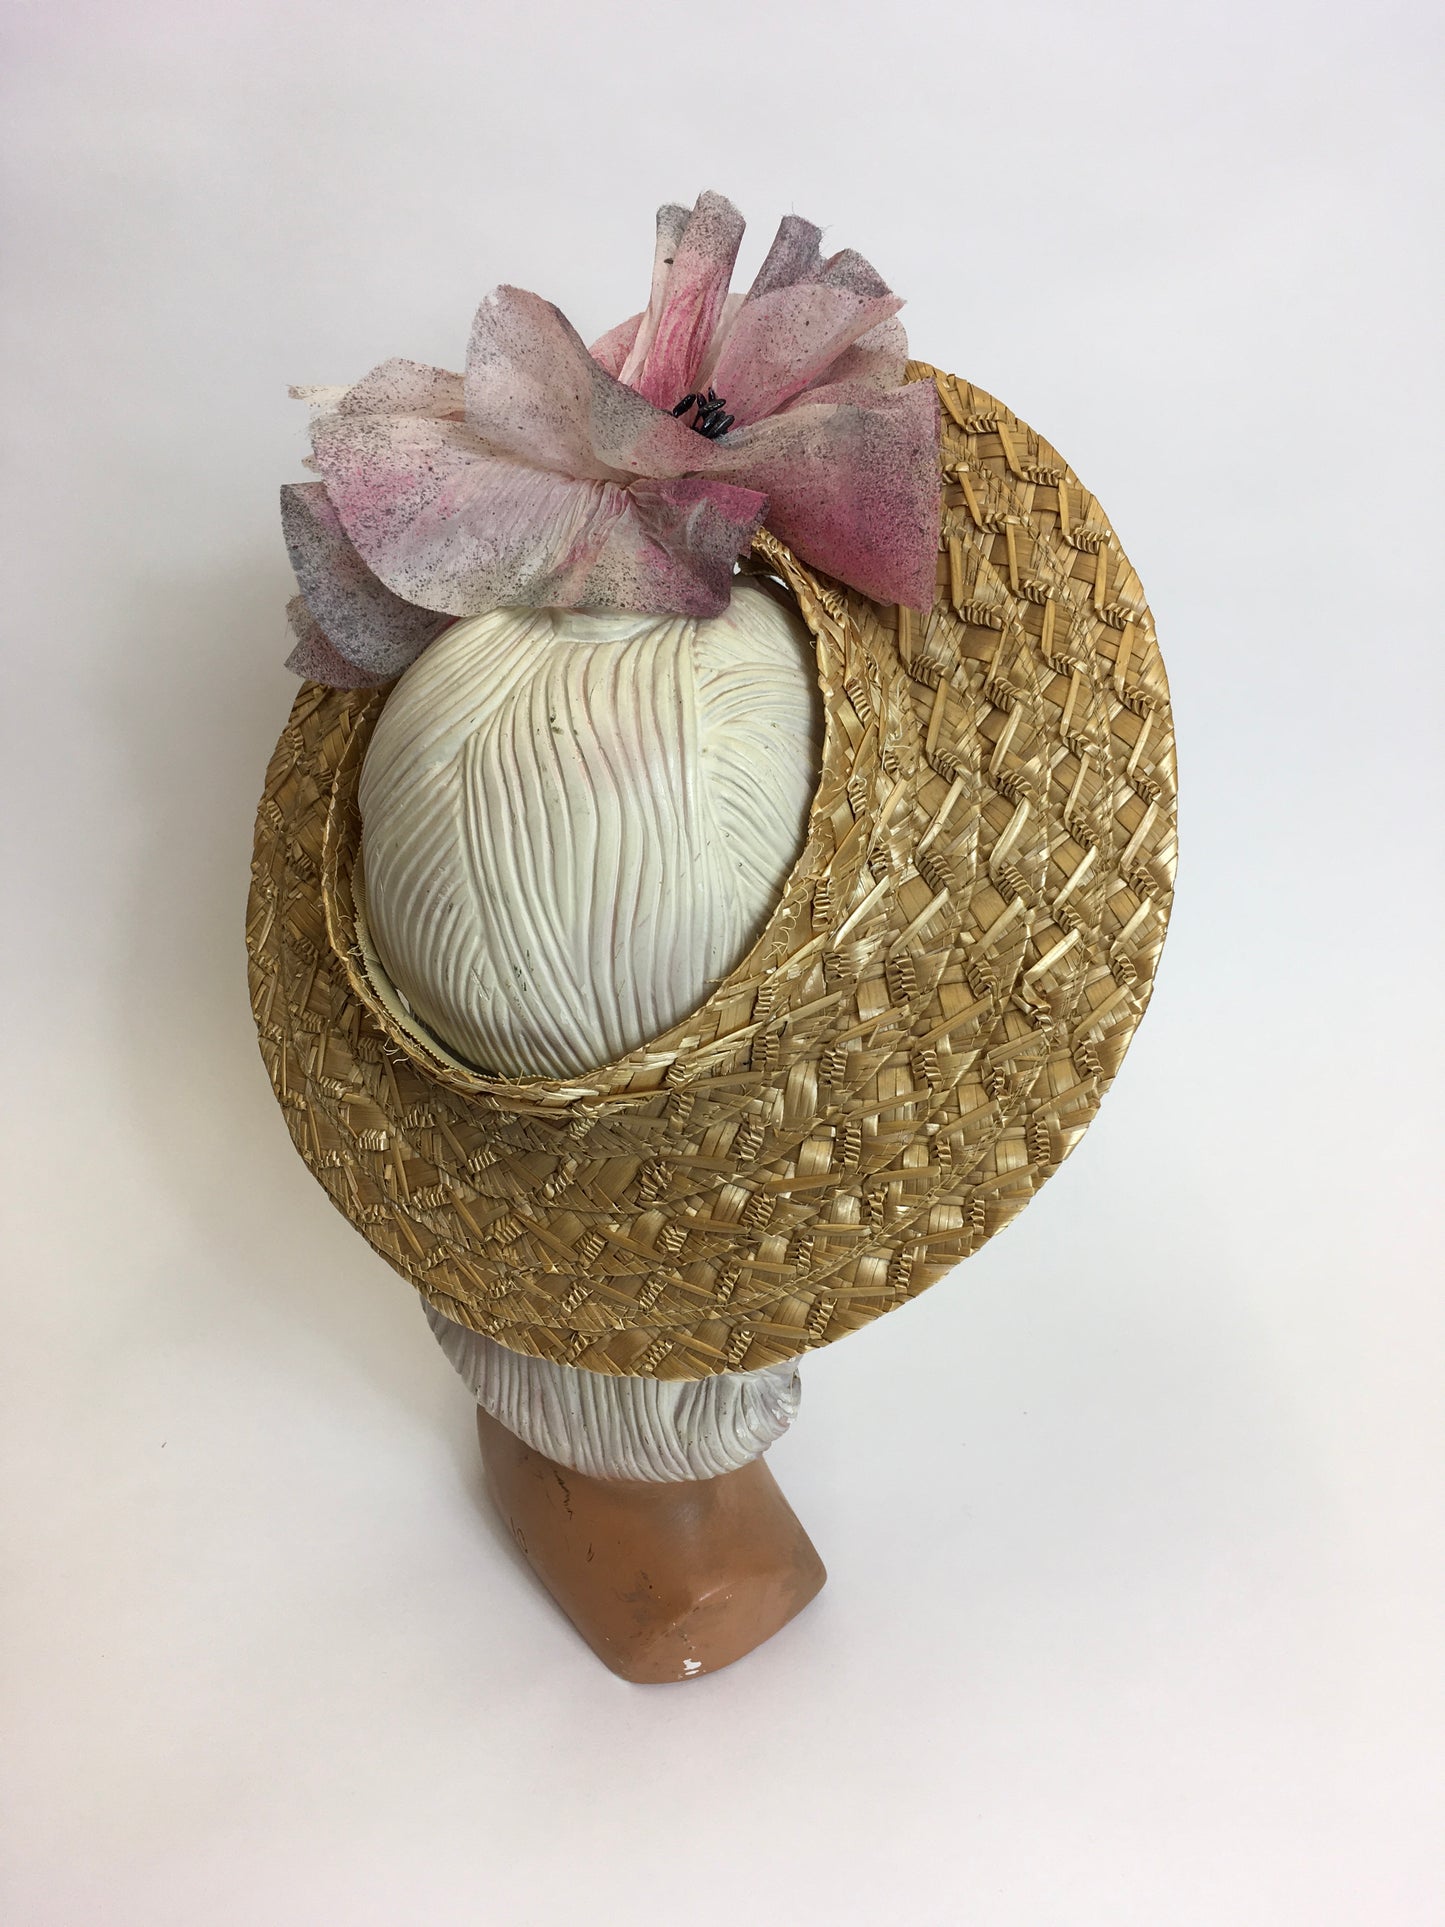 Original 1940’s Summer Open Crown Straw Hat - With Original Floral Adornment